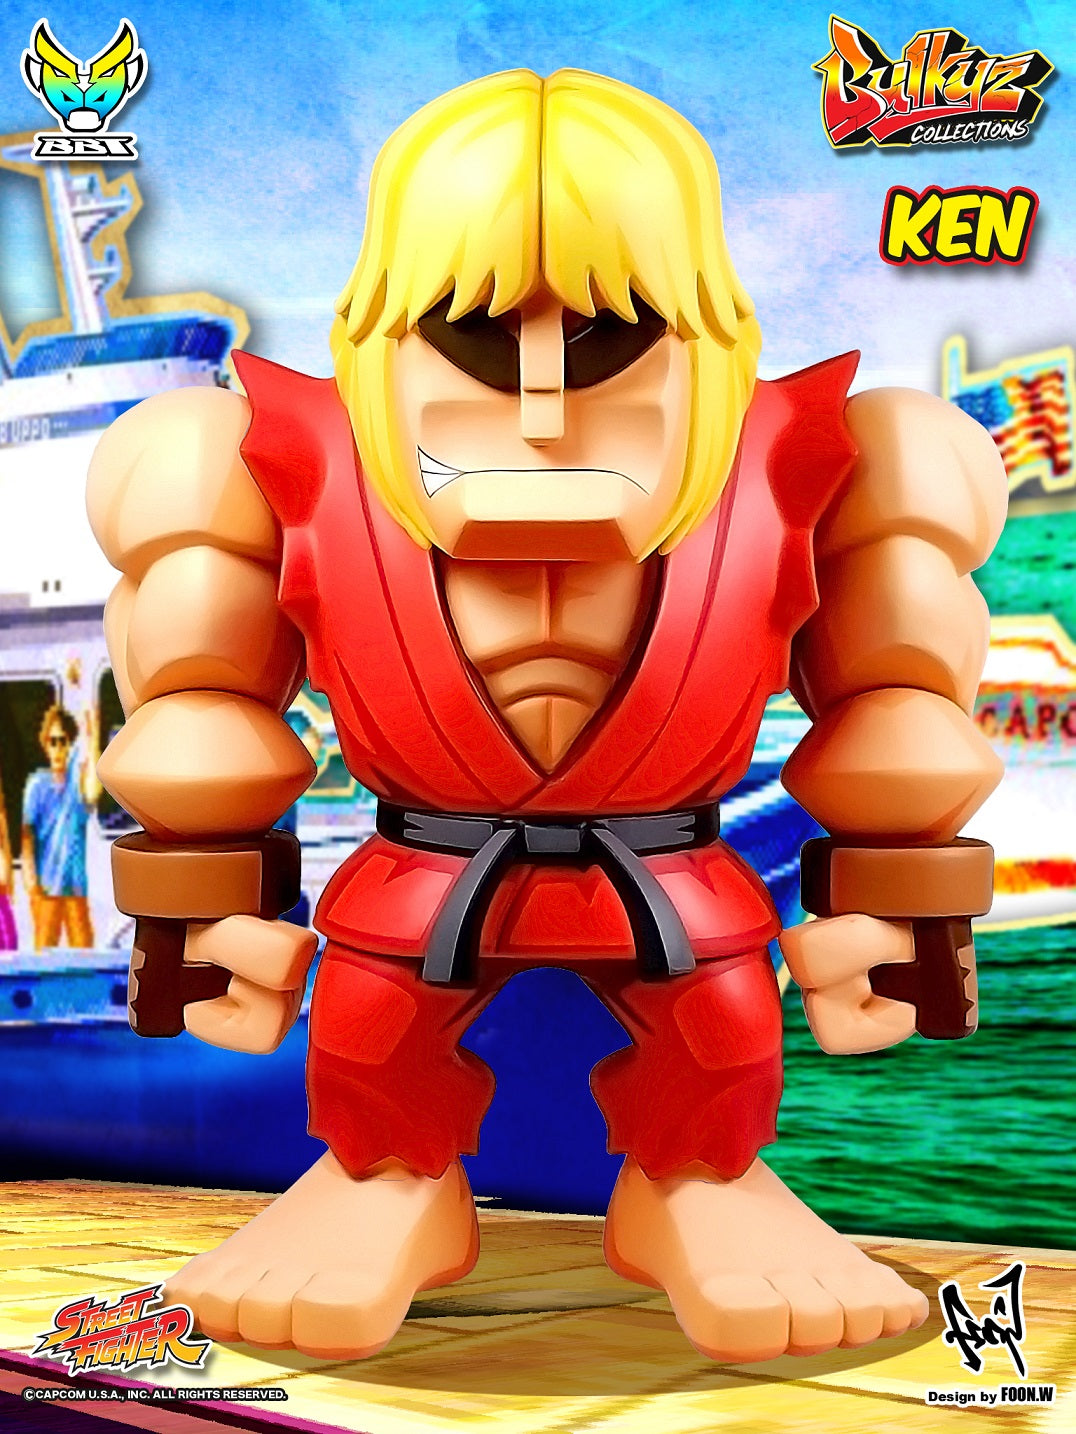 Big Boys Toys Bulkyz Ken Street Fighter Collections